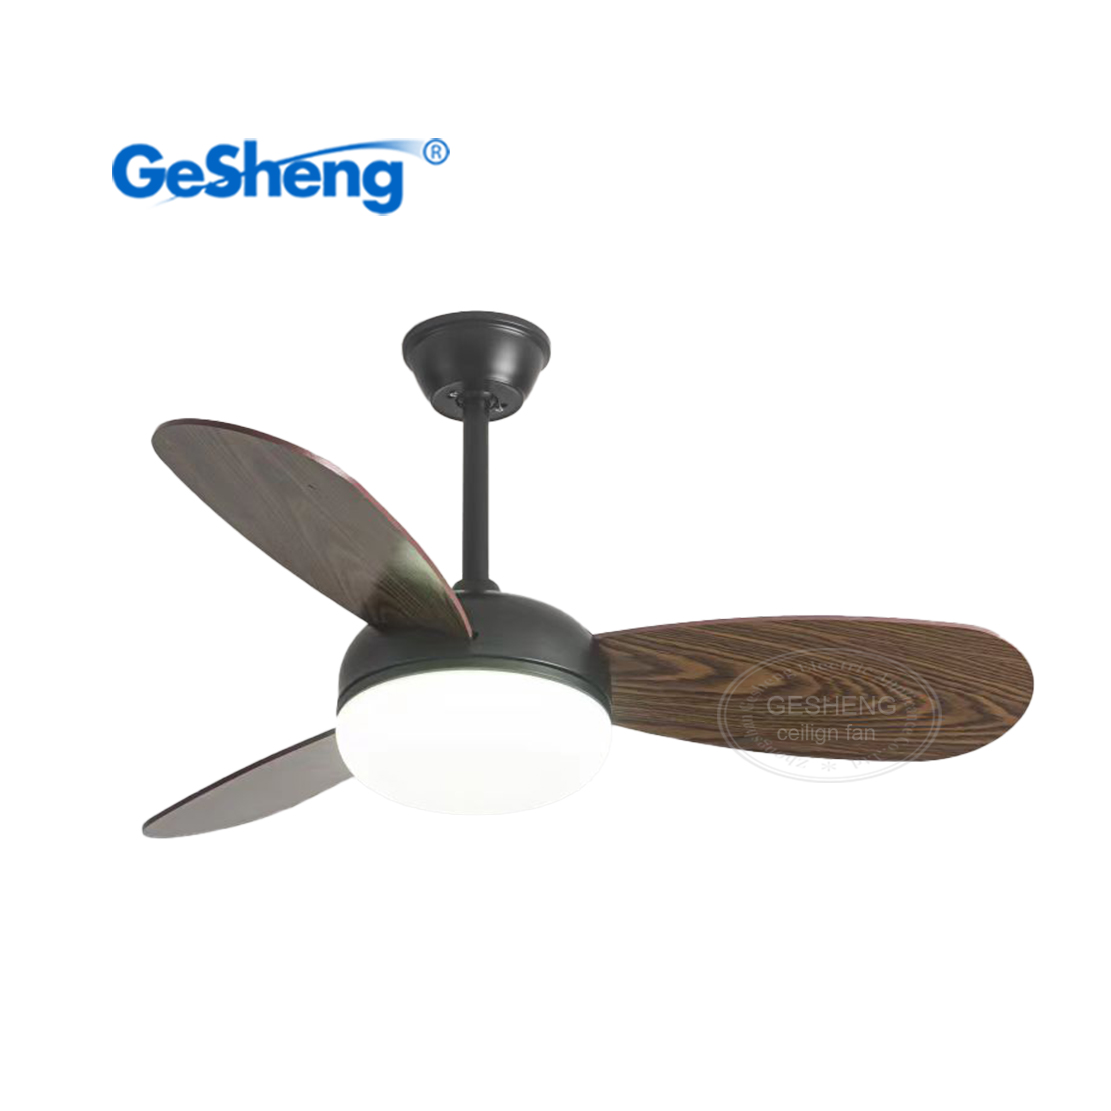 Gesheng wooden ceiling fan light 3 blades dc motor remot control wood blade ceiling fan with light